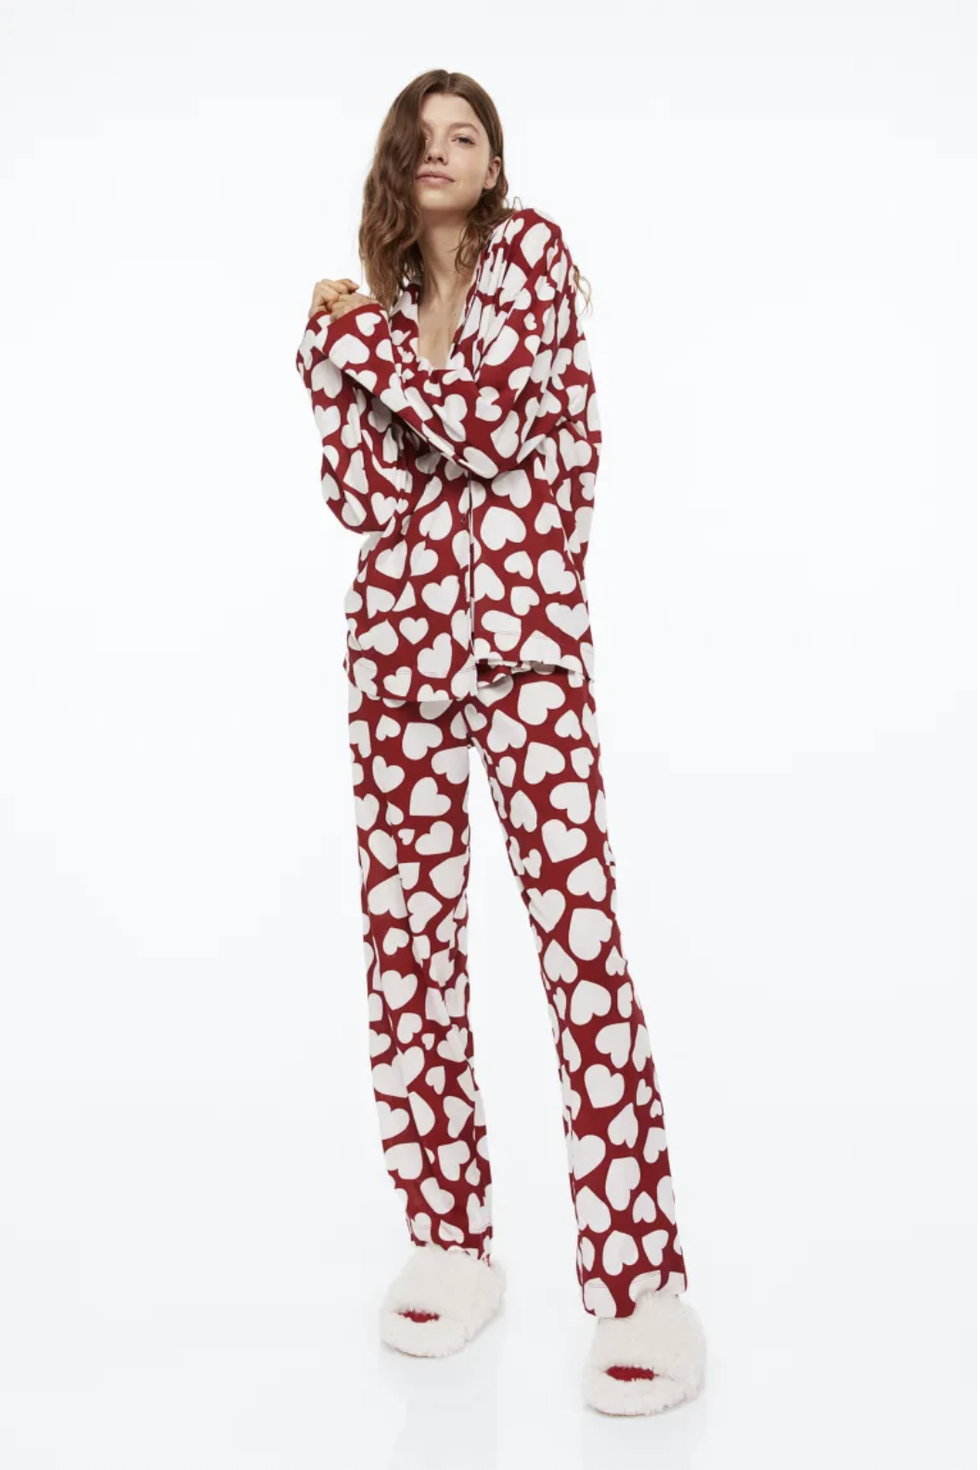 Ladies - Beige Satin Pajamas - Size: L - H&M